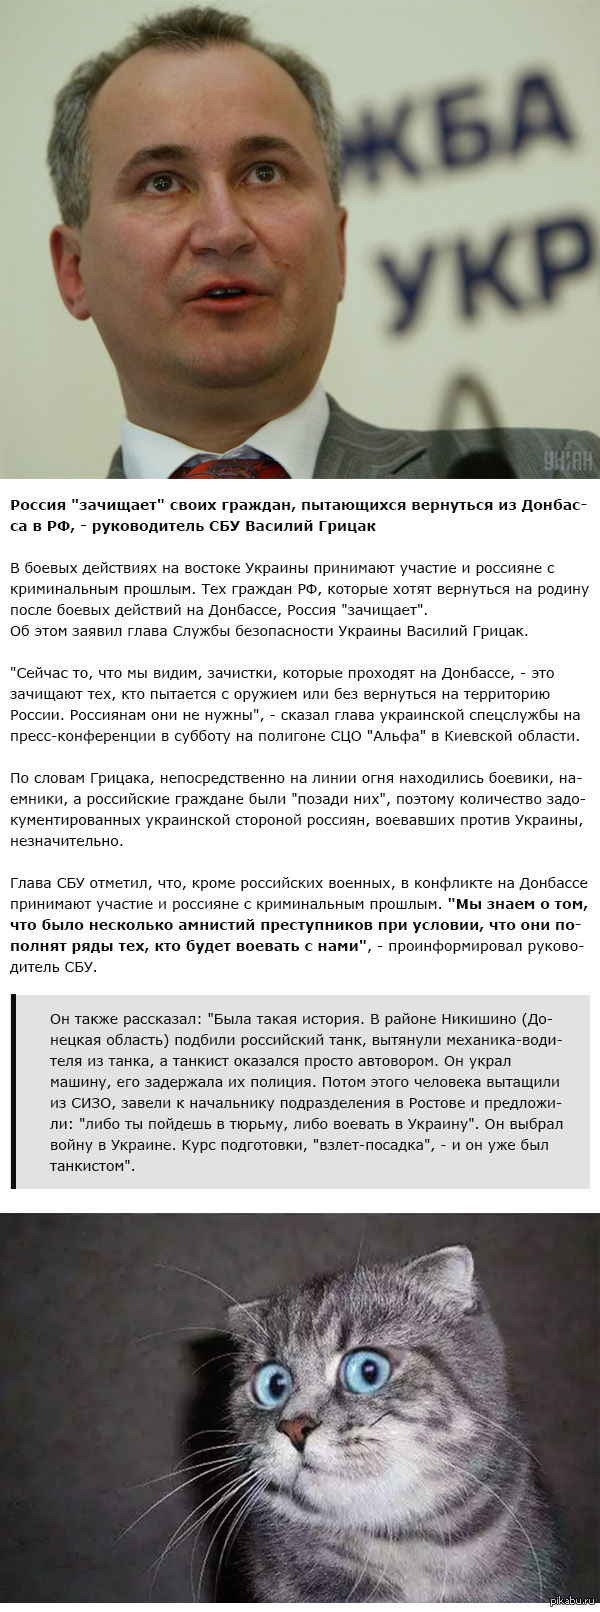      -  ,        http://interfax.com.ua/news/general/295705.html